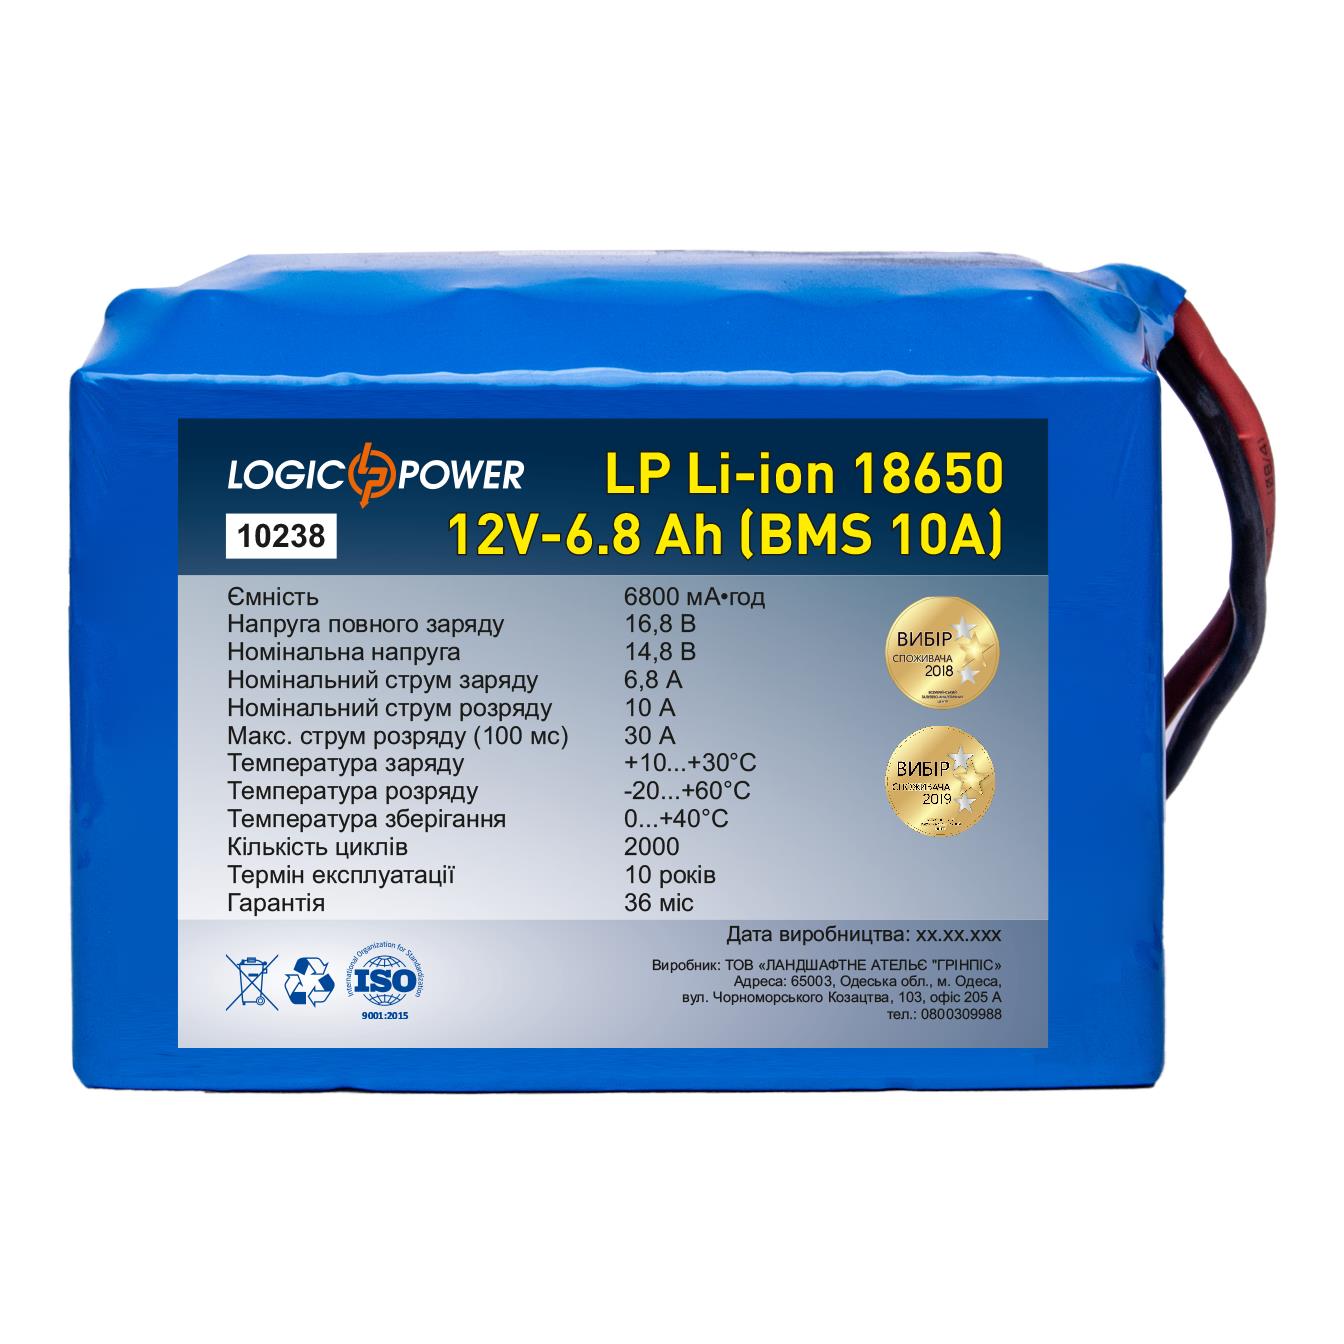 Акумулятор Li-Ion LogicPower LP Li-ion 18650 12V - 6.8 Ah (BMS 10A) (10238)